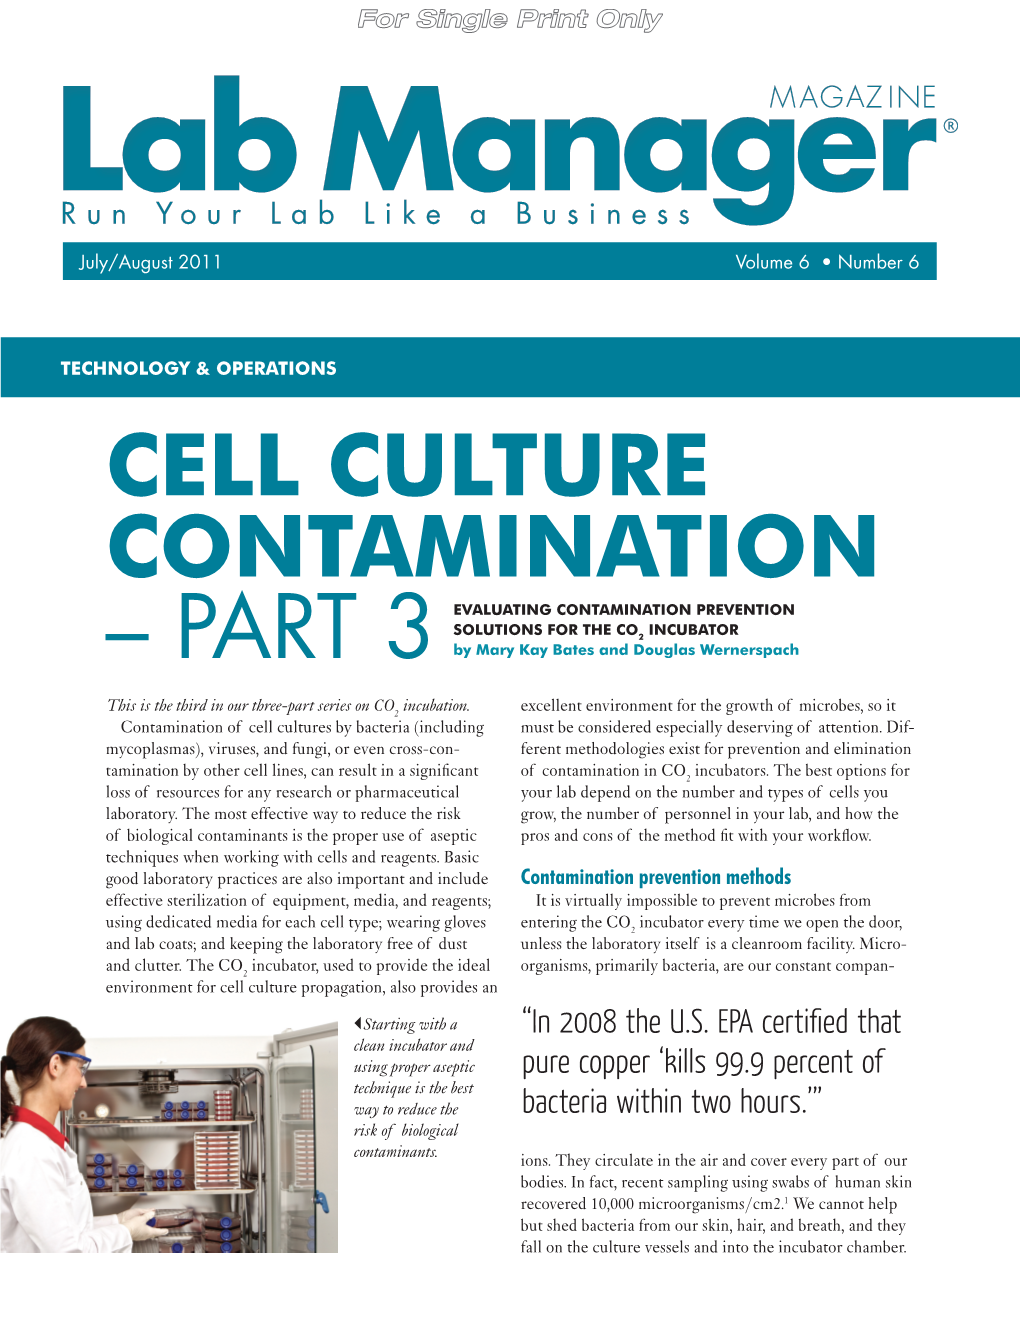 Cell Culture Contamination Evaluating Contamination Prevention